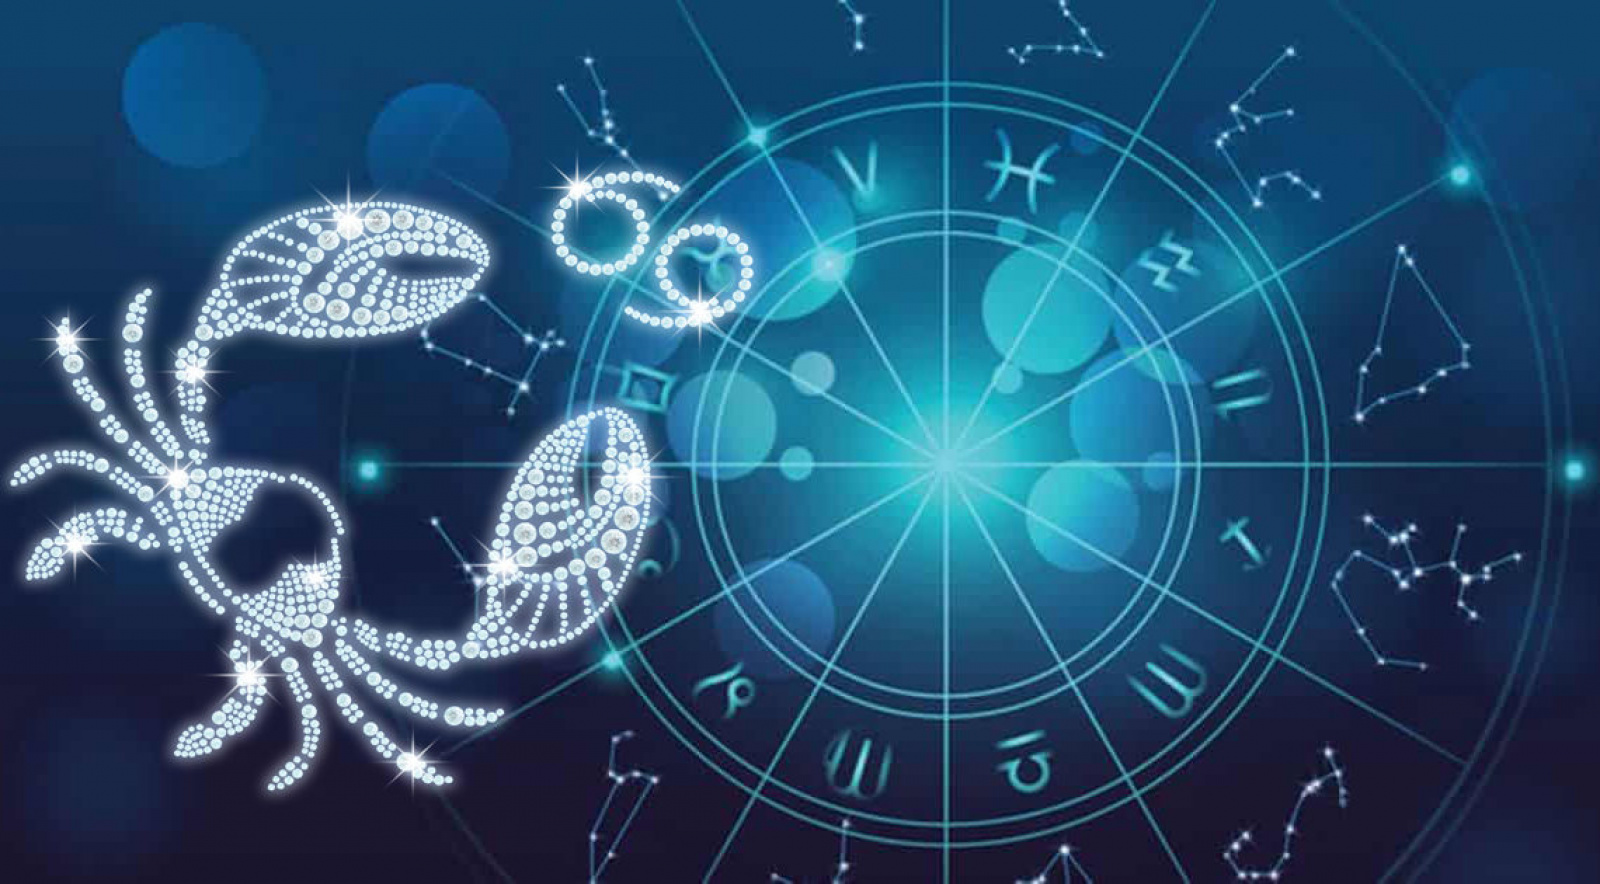 Картинка зодиака рак. Знаки зодиака. Гороскоп на 2023 год. Астрологический фон. Знаки зодиака rak.